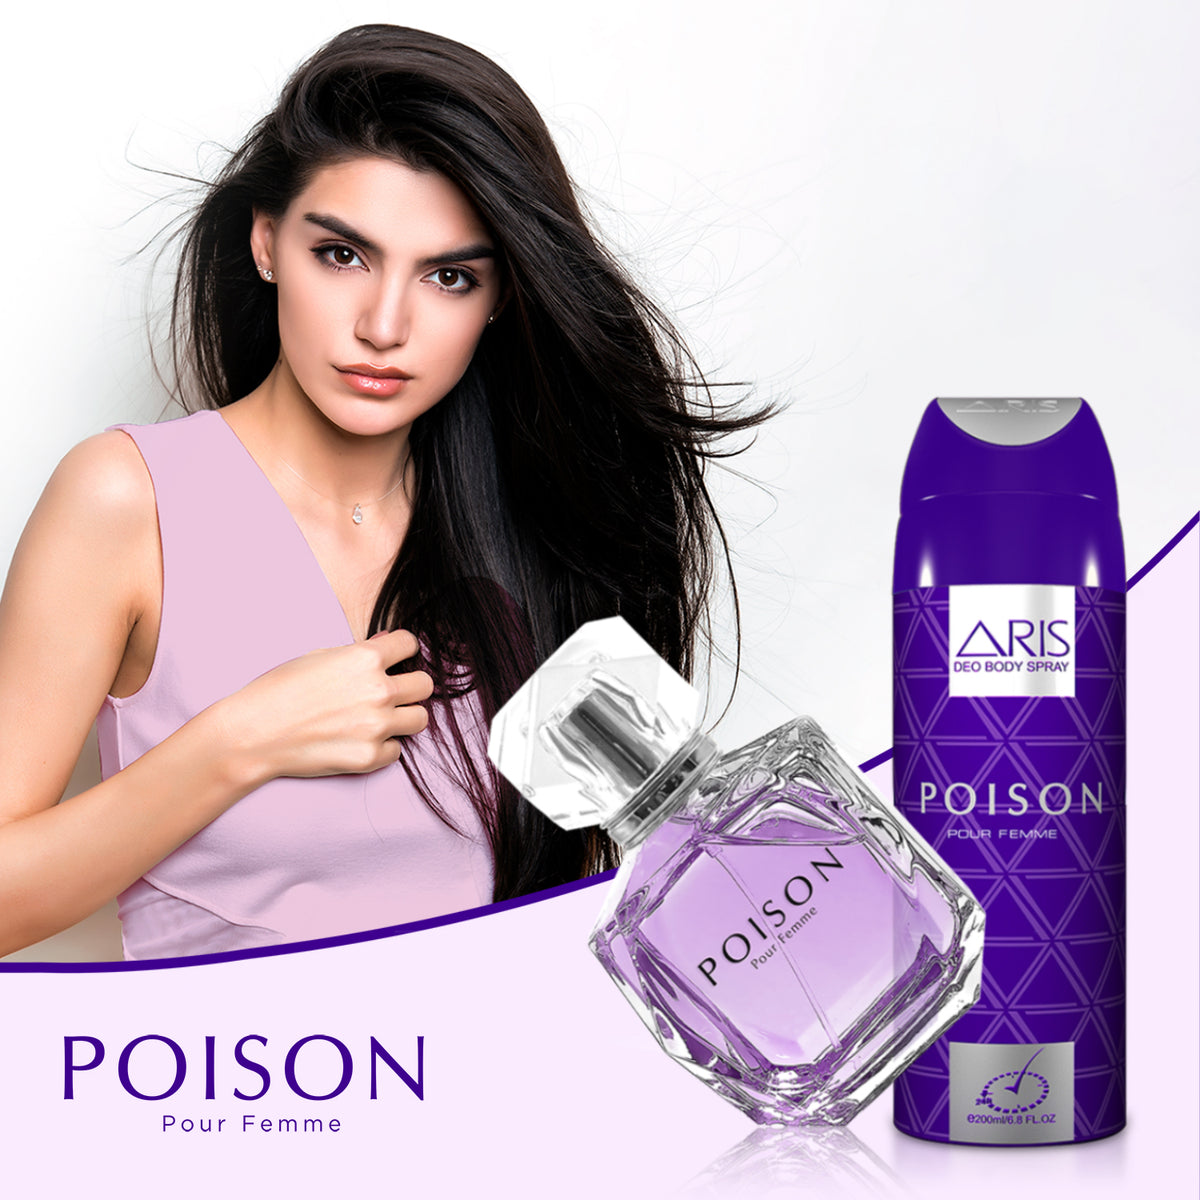 Aris Cosmetics Deodorant Body Spray - Poison, 200ml Gardenia Cosmotrade LLP